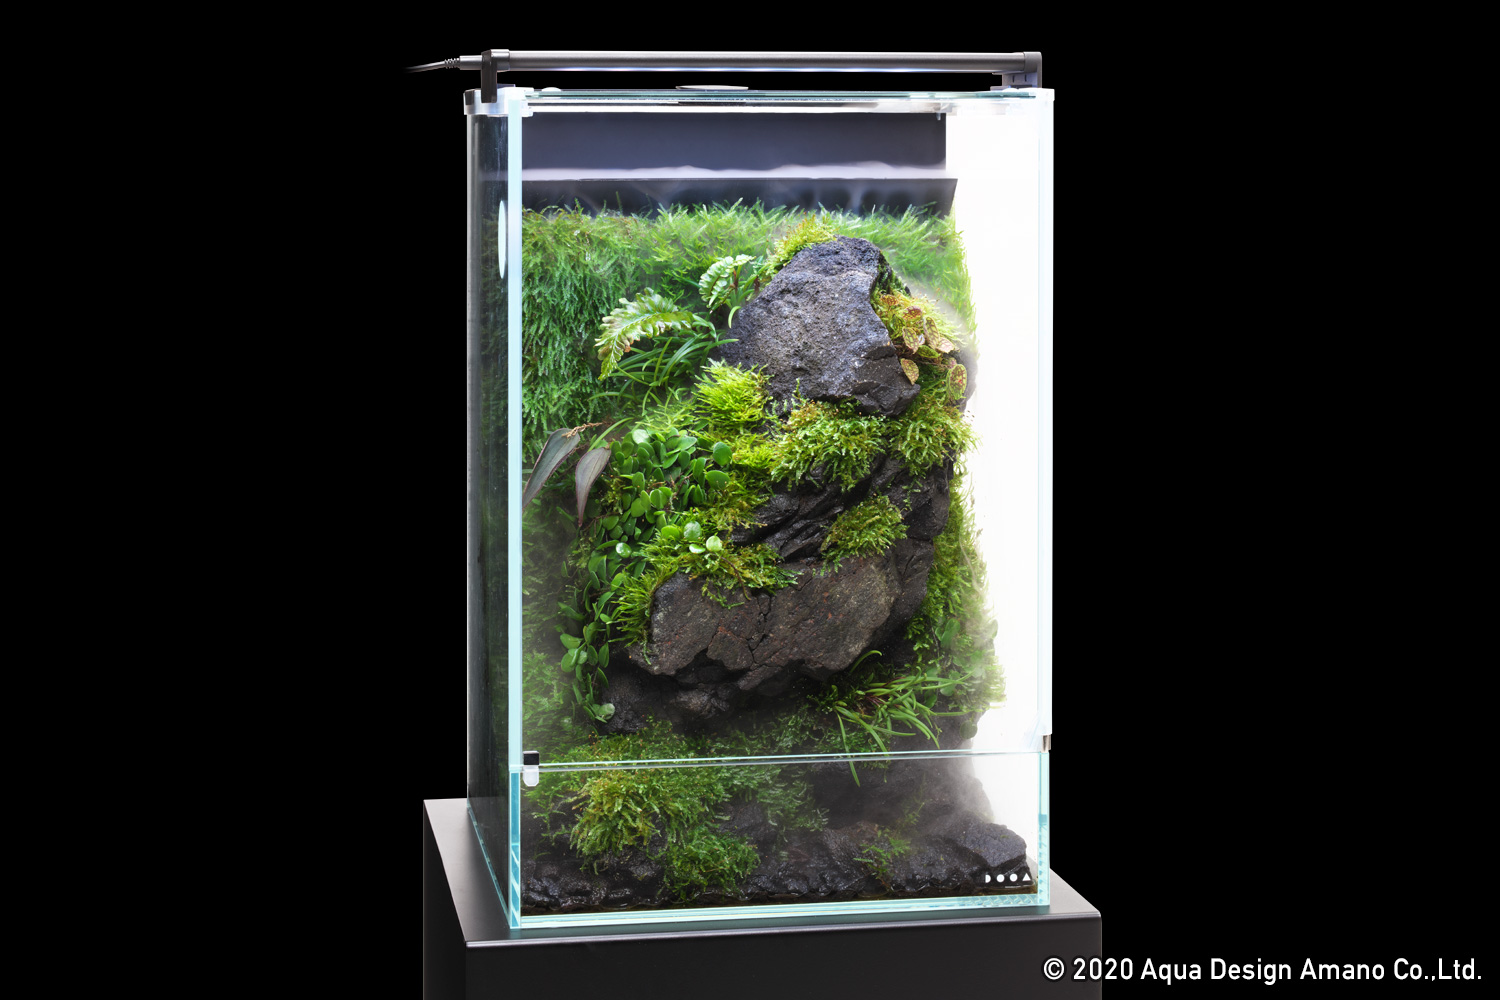 Enjoy DOOA 「高湿度を好む苔や植物 システムパルダで “石と苔の涼”を